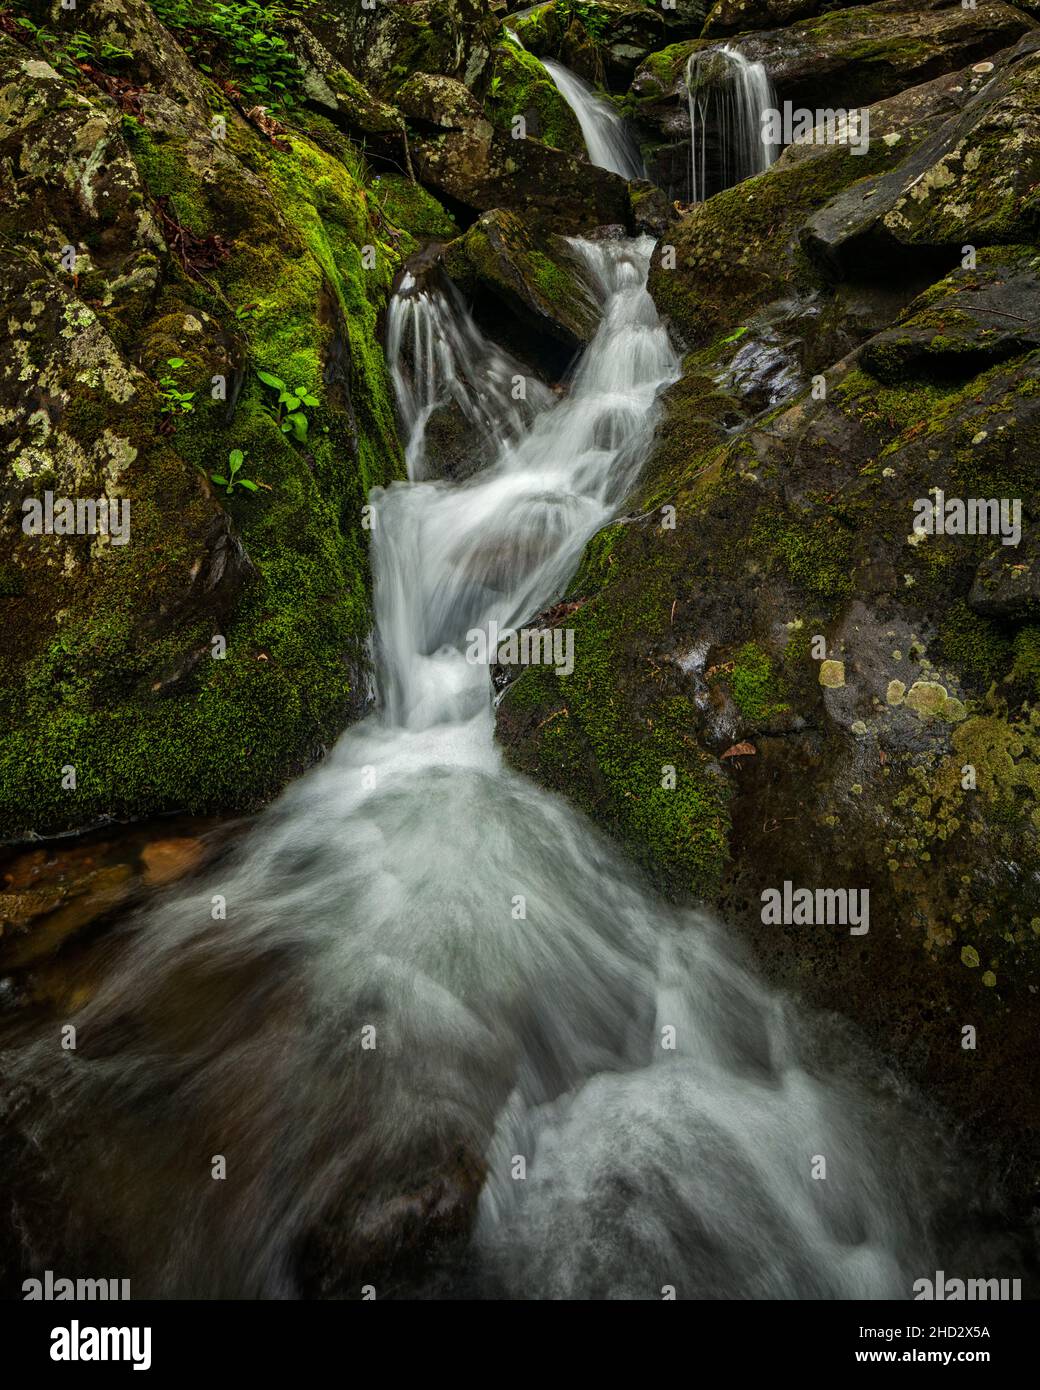 Cascate d'acqua e rocce ricoperte di muschio nel Parco Nazionale di Shenandoah in Virginia Foto Stock